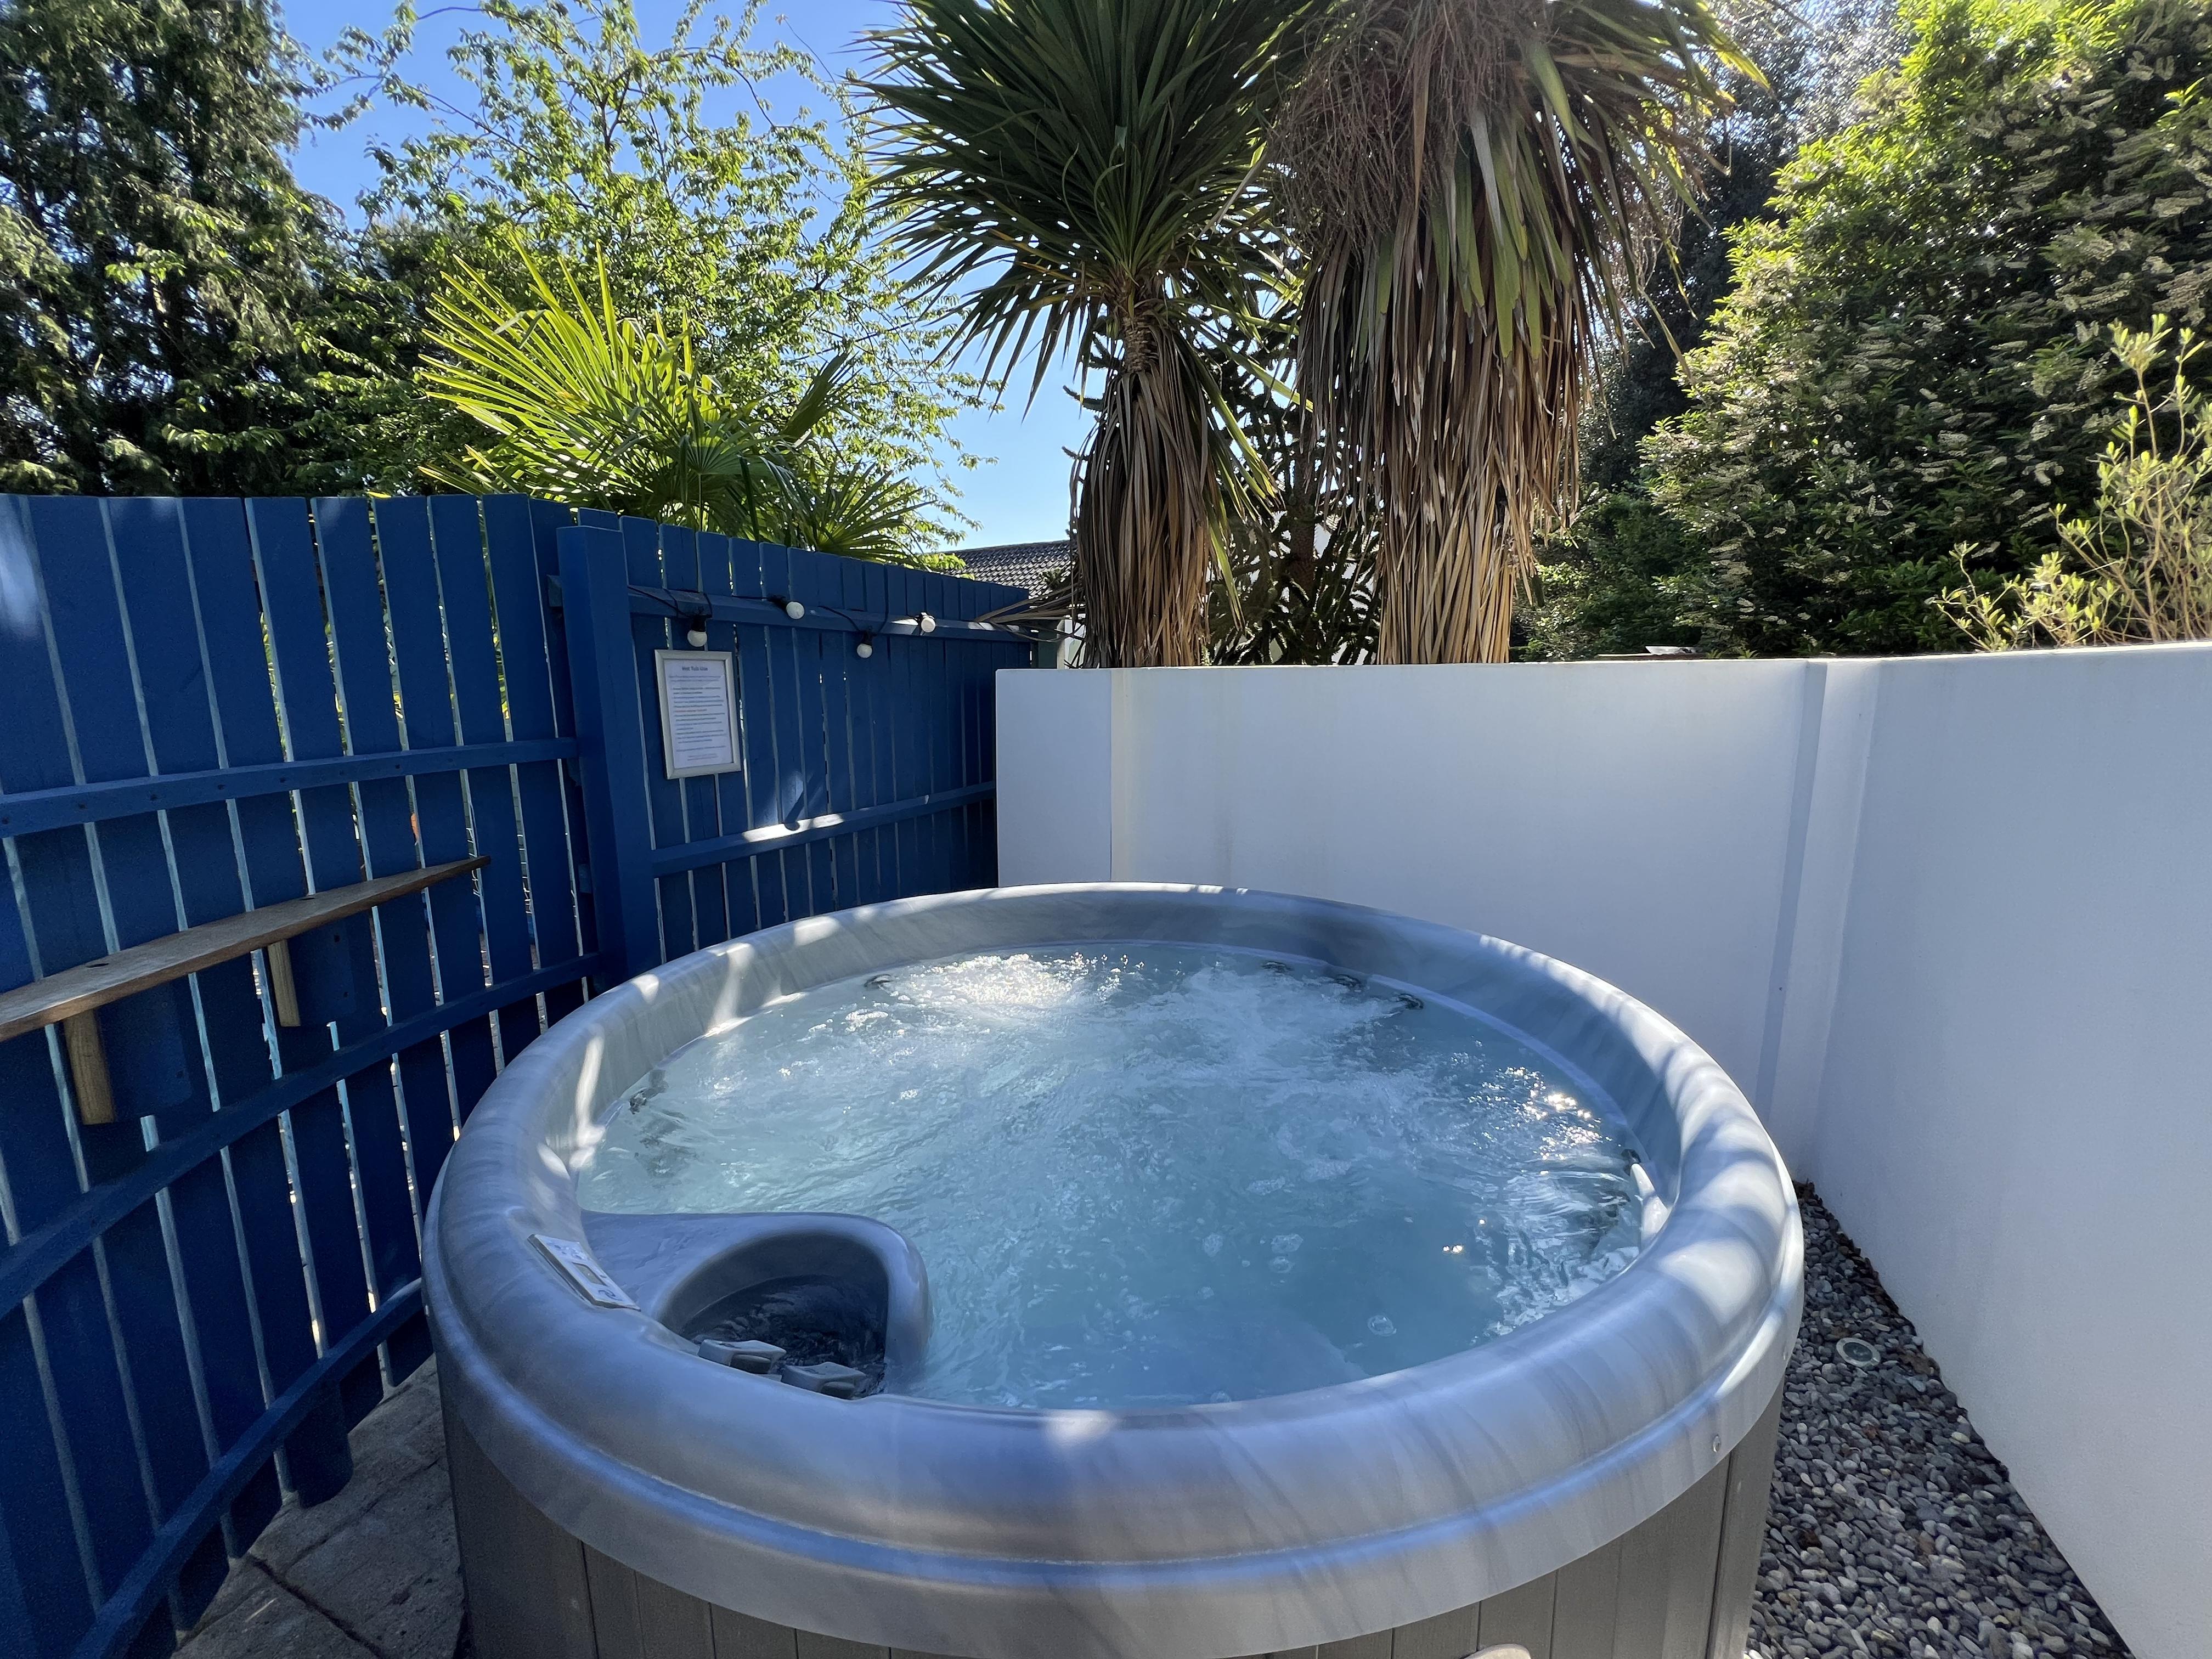 Poolside Lodges - hot tub at Poolside Lodge